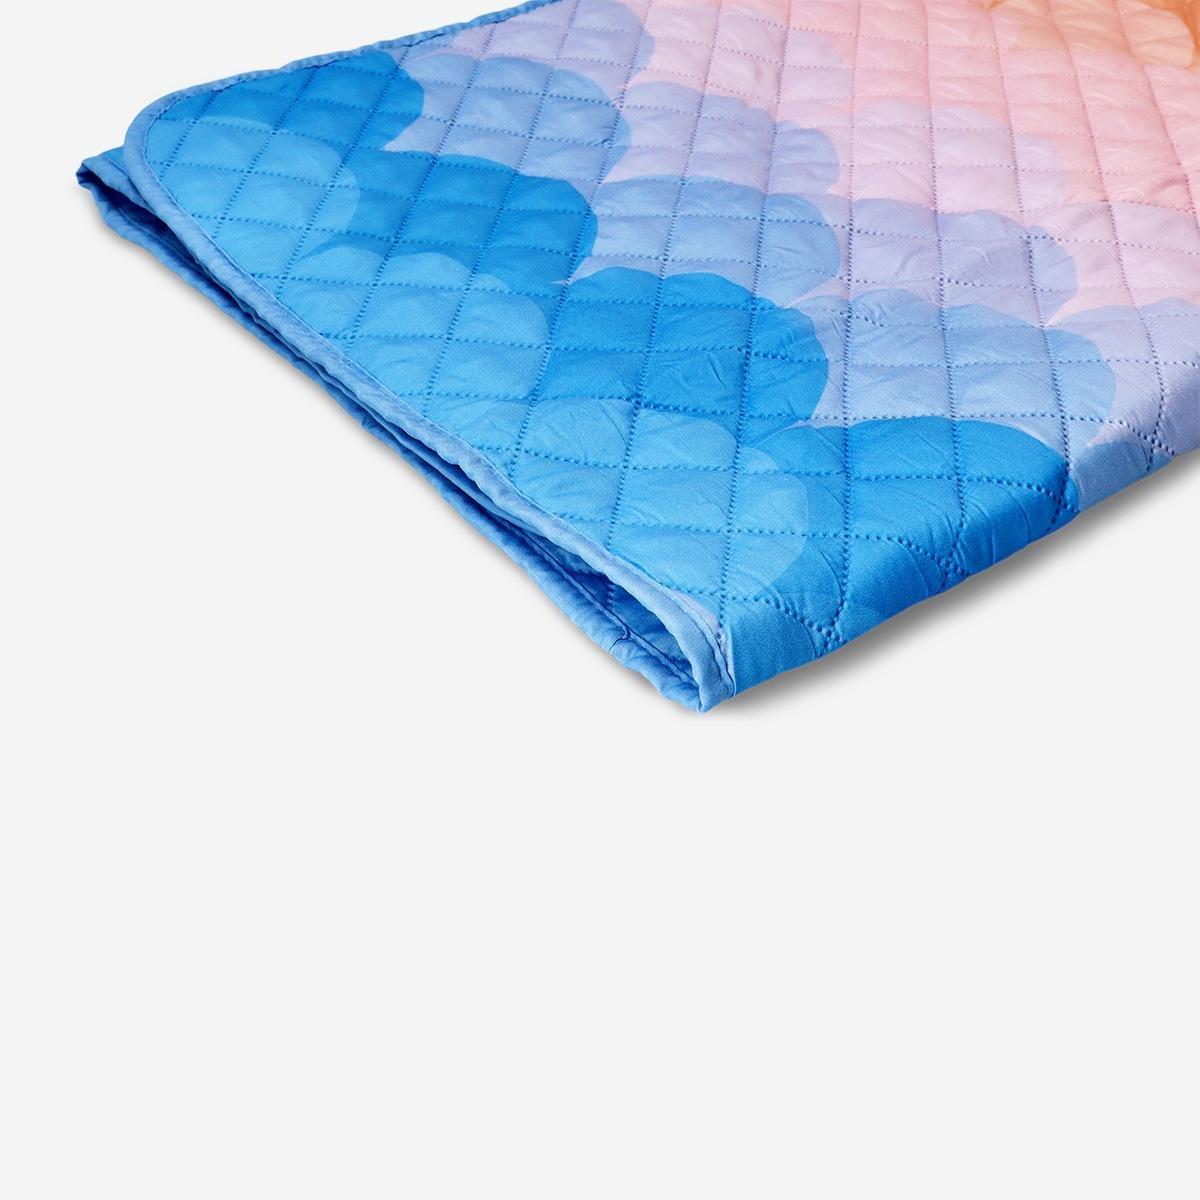 Blanket. 170x130 cm